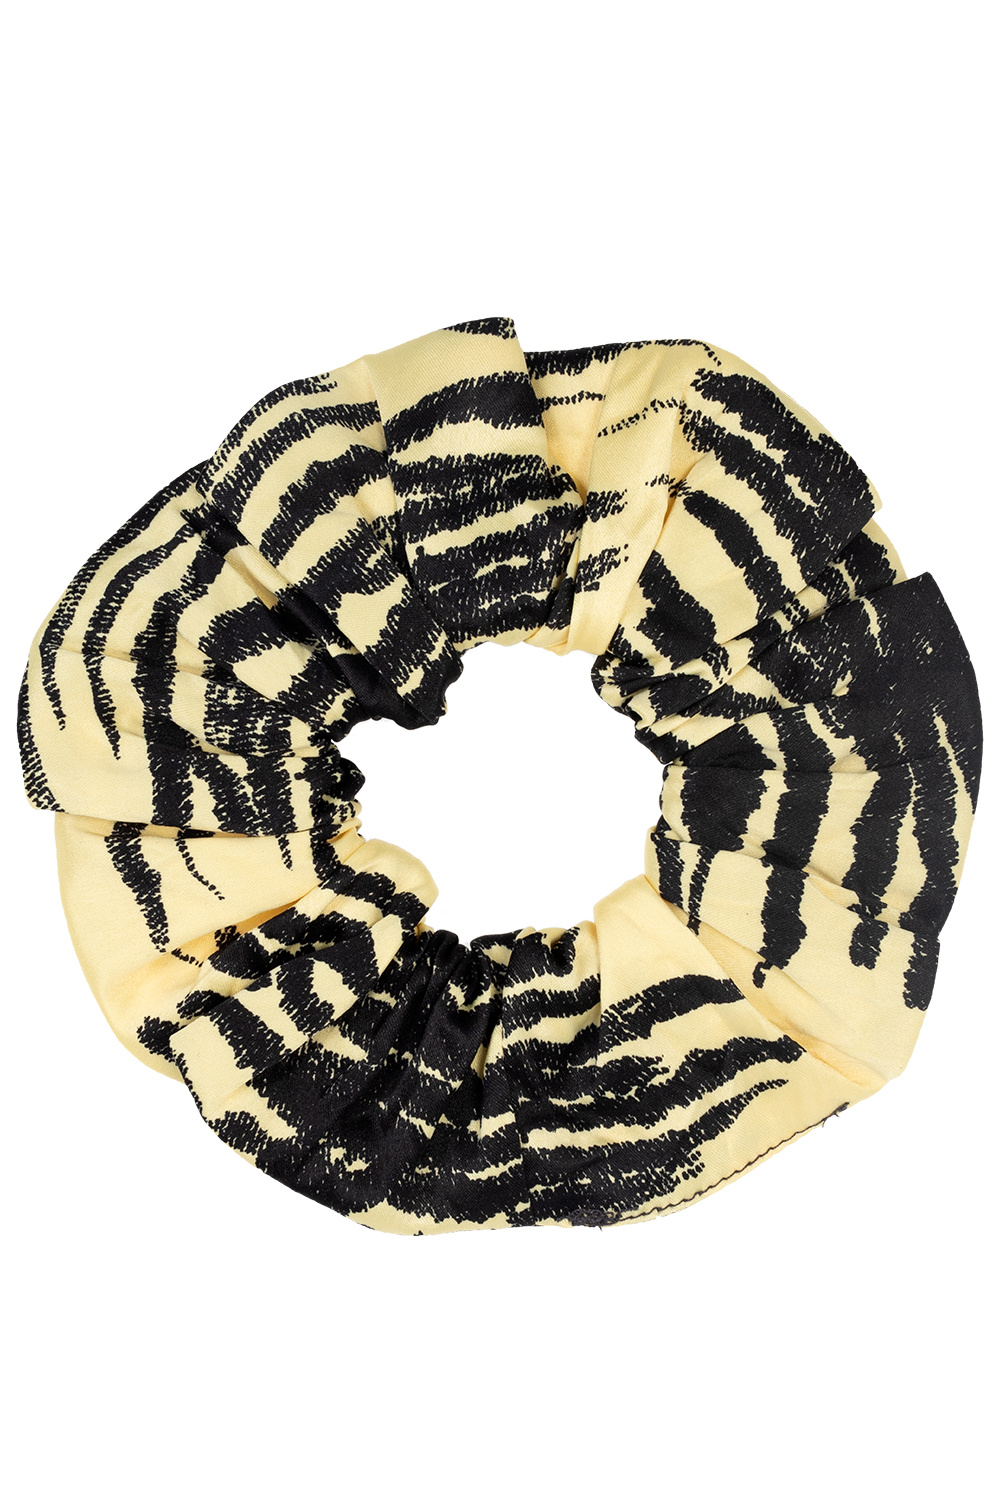 Ganni Printed scrunchie